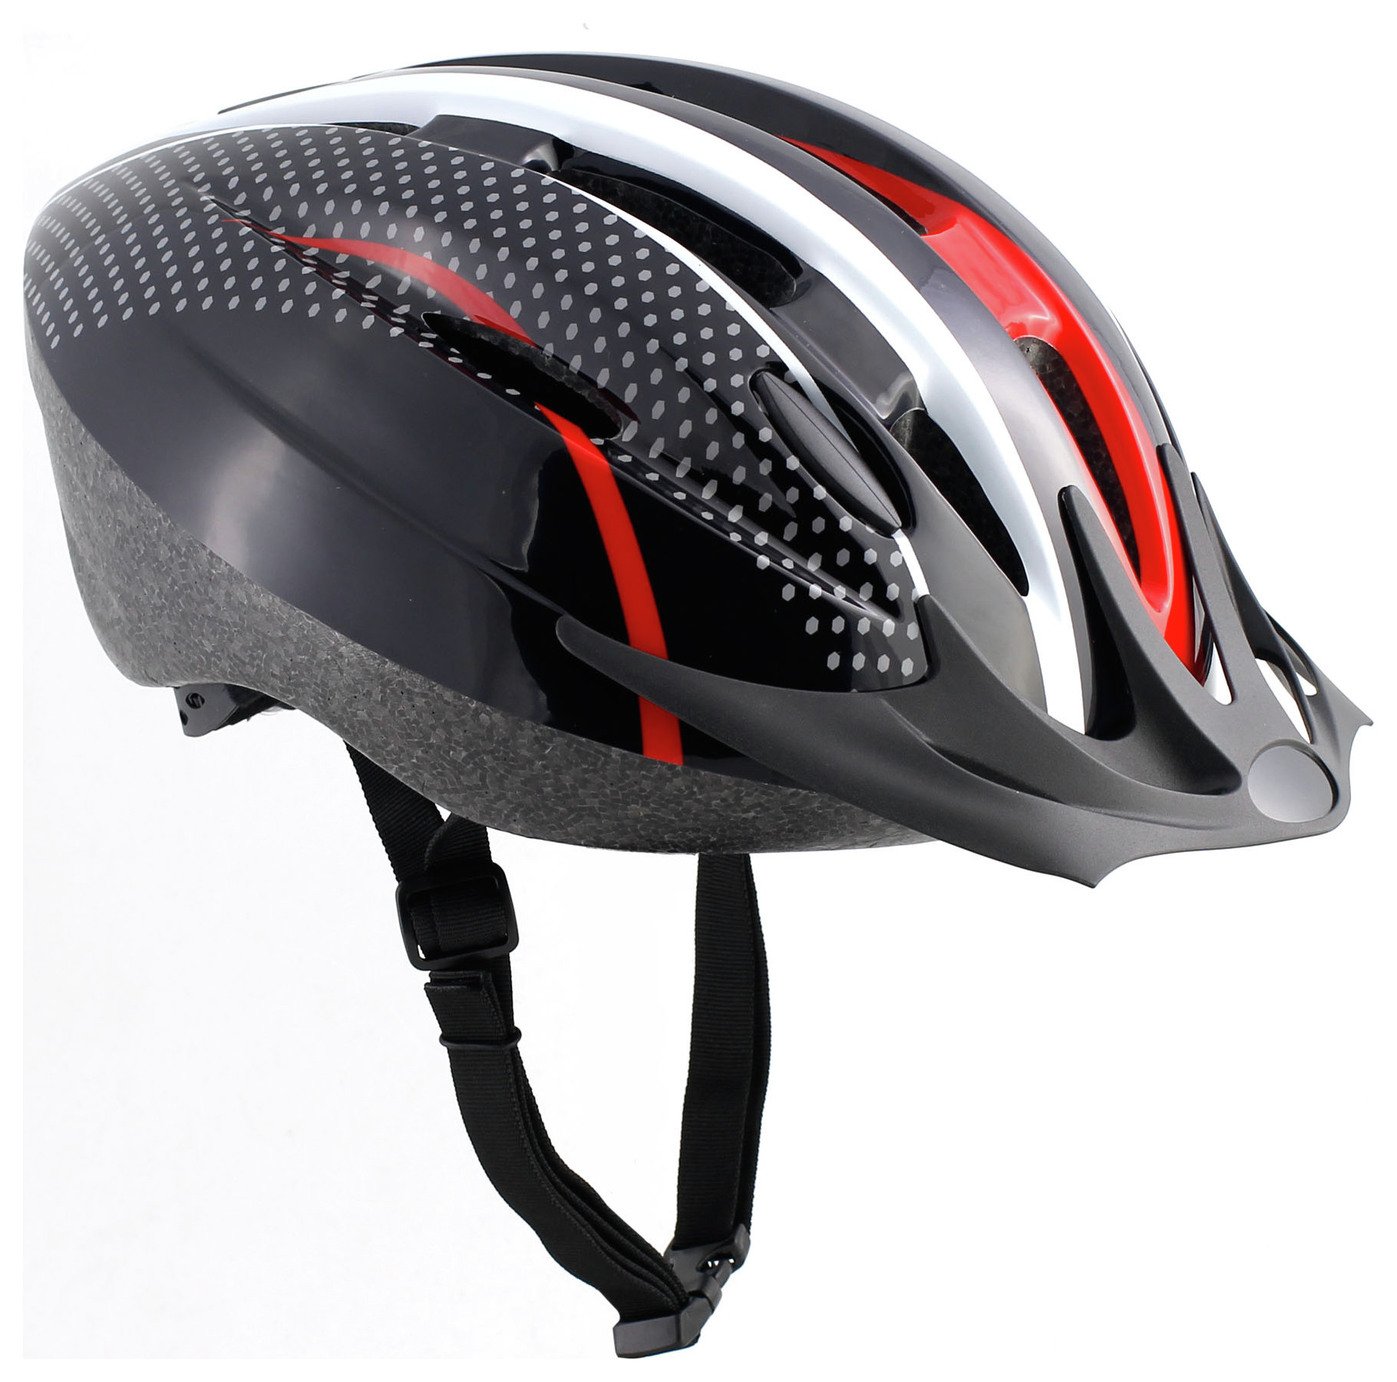 unicorn bike helmet asda